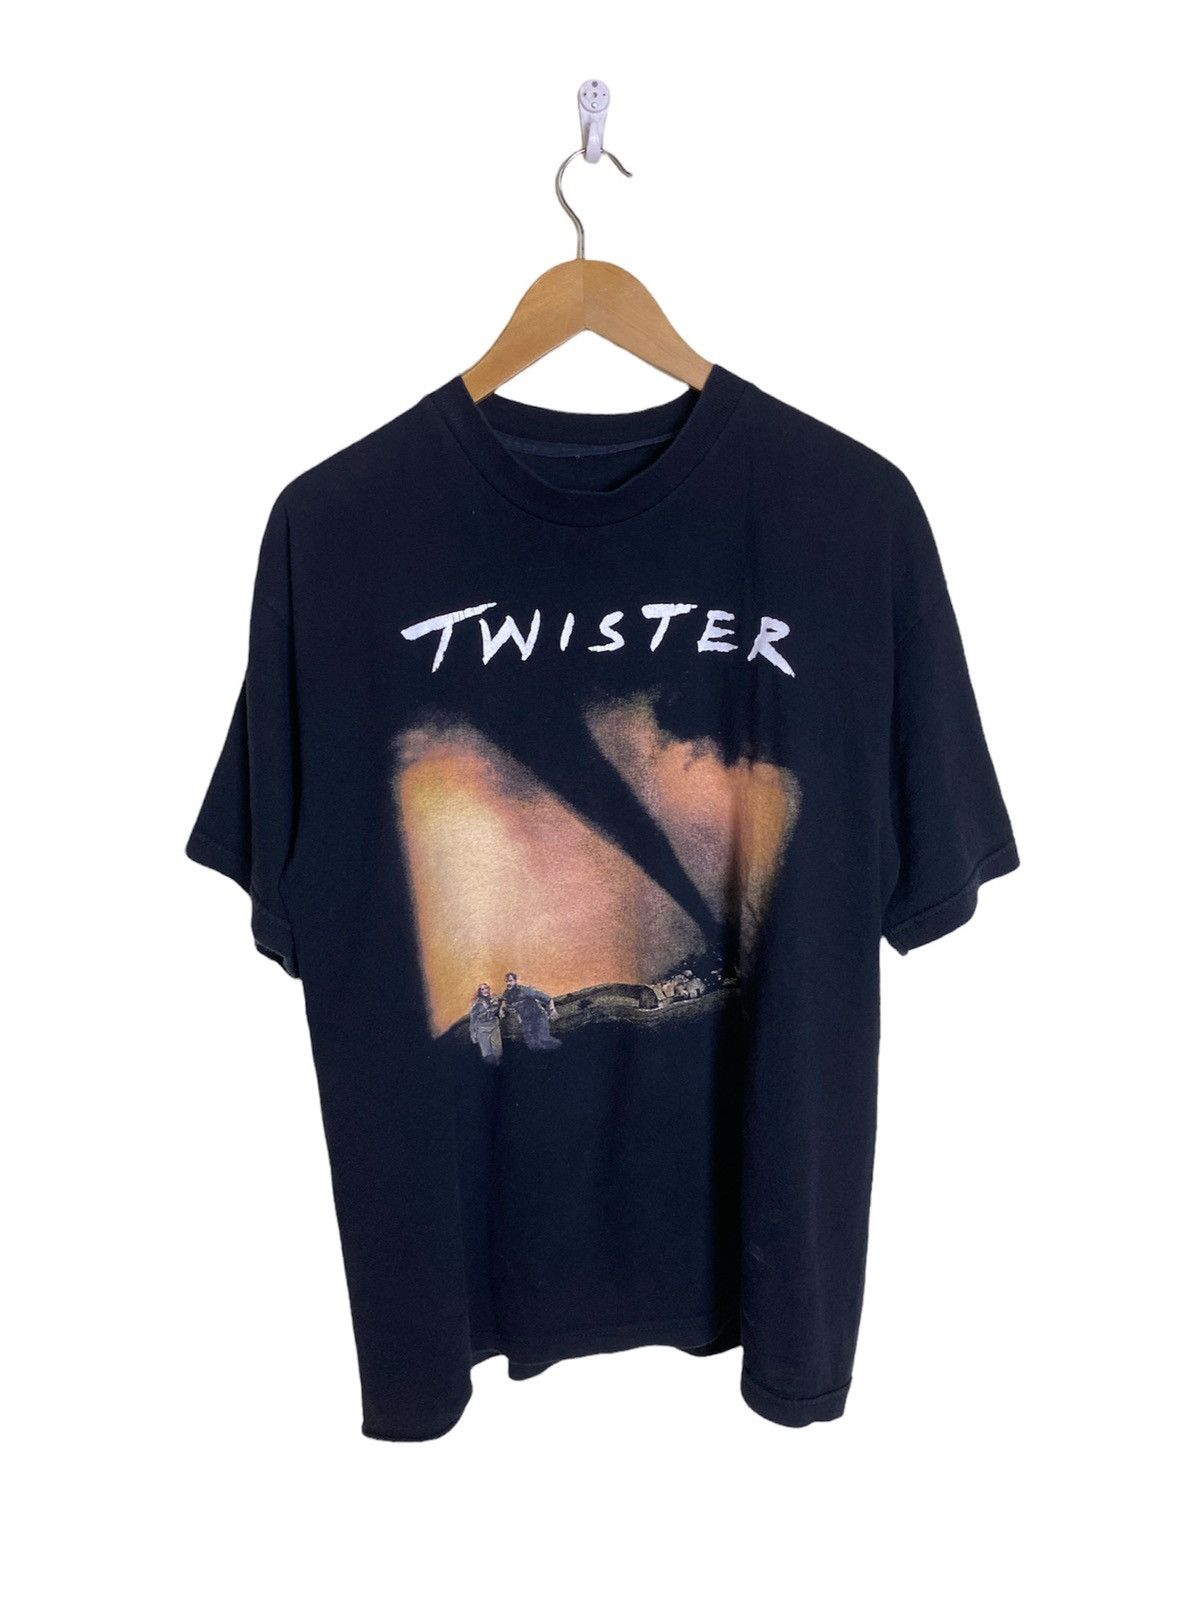 Vintage 90s Twister Movie Promo Tshirt - 1